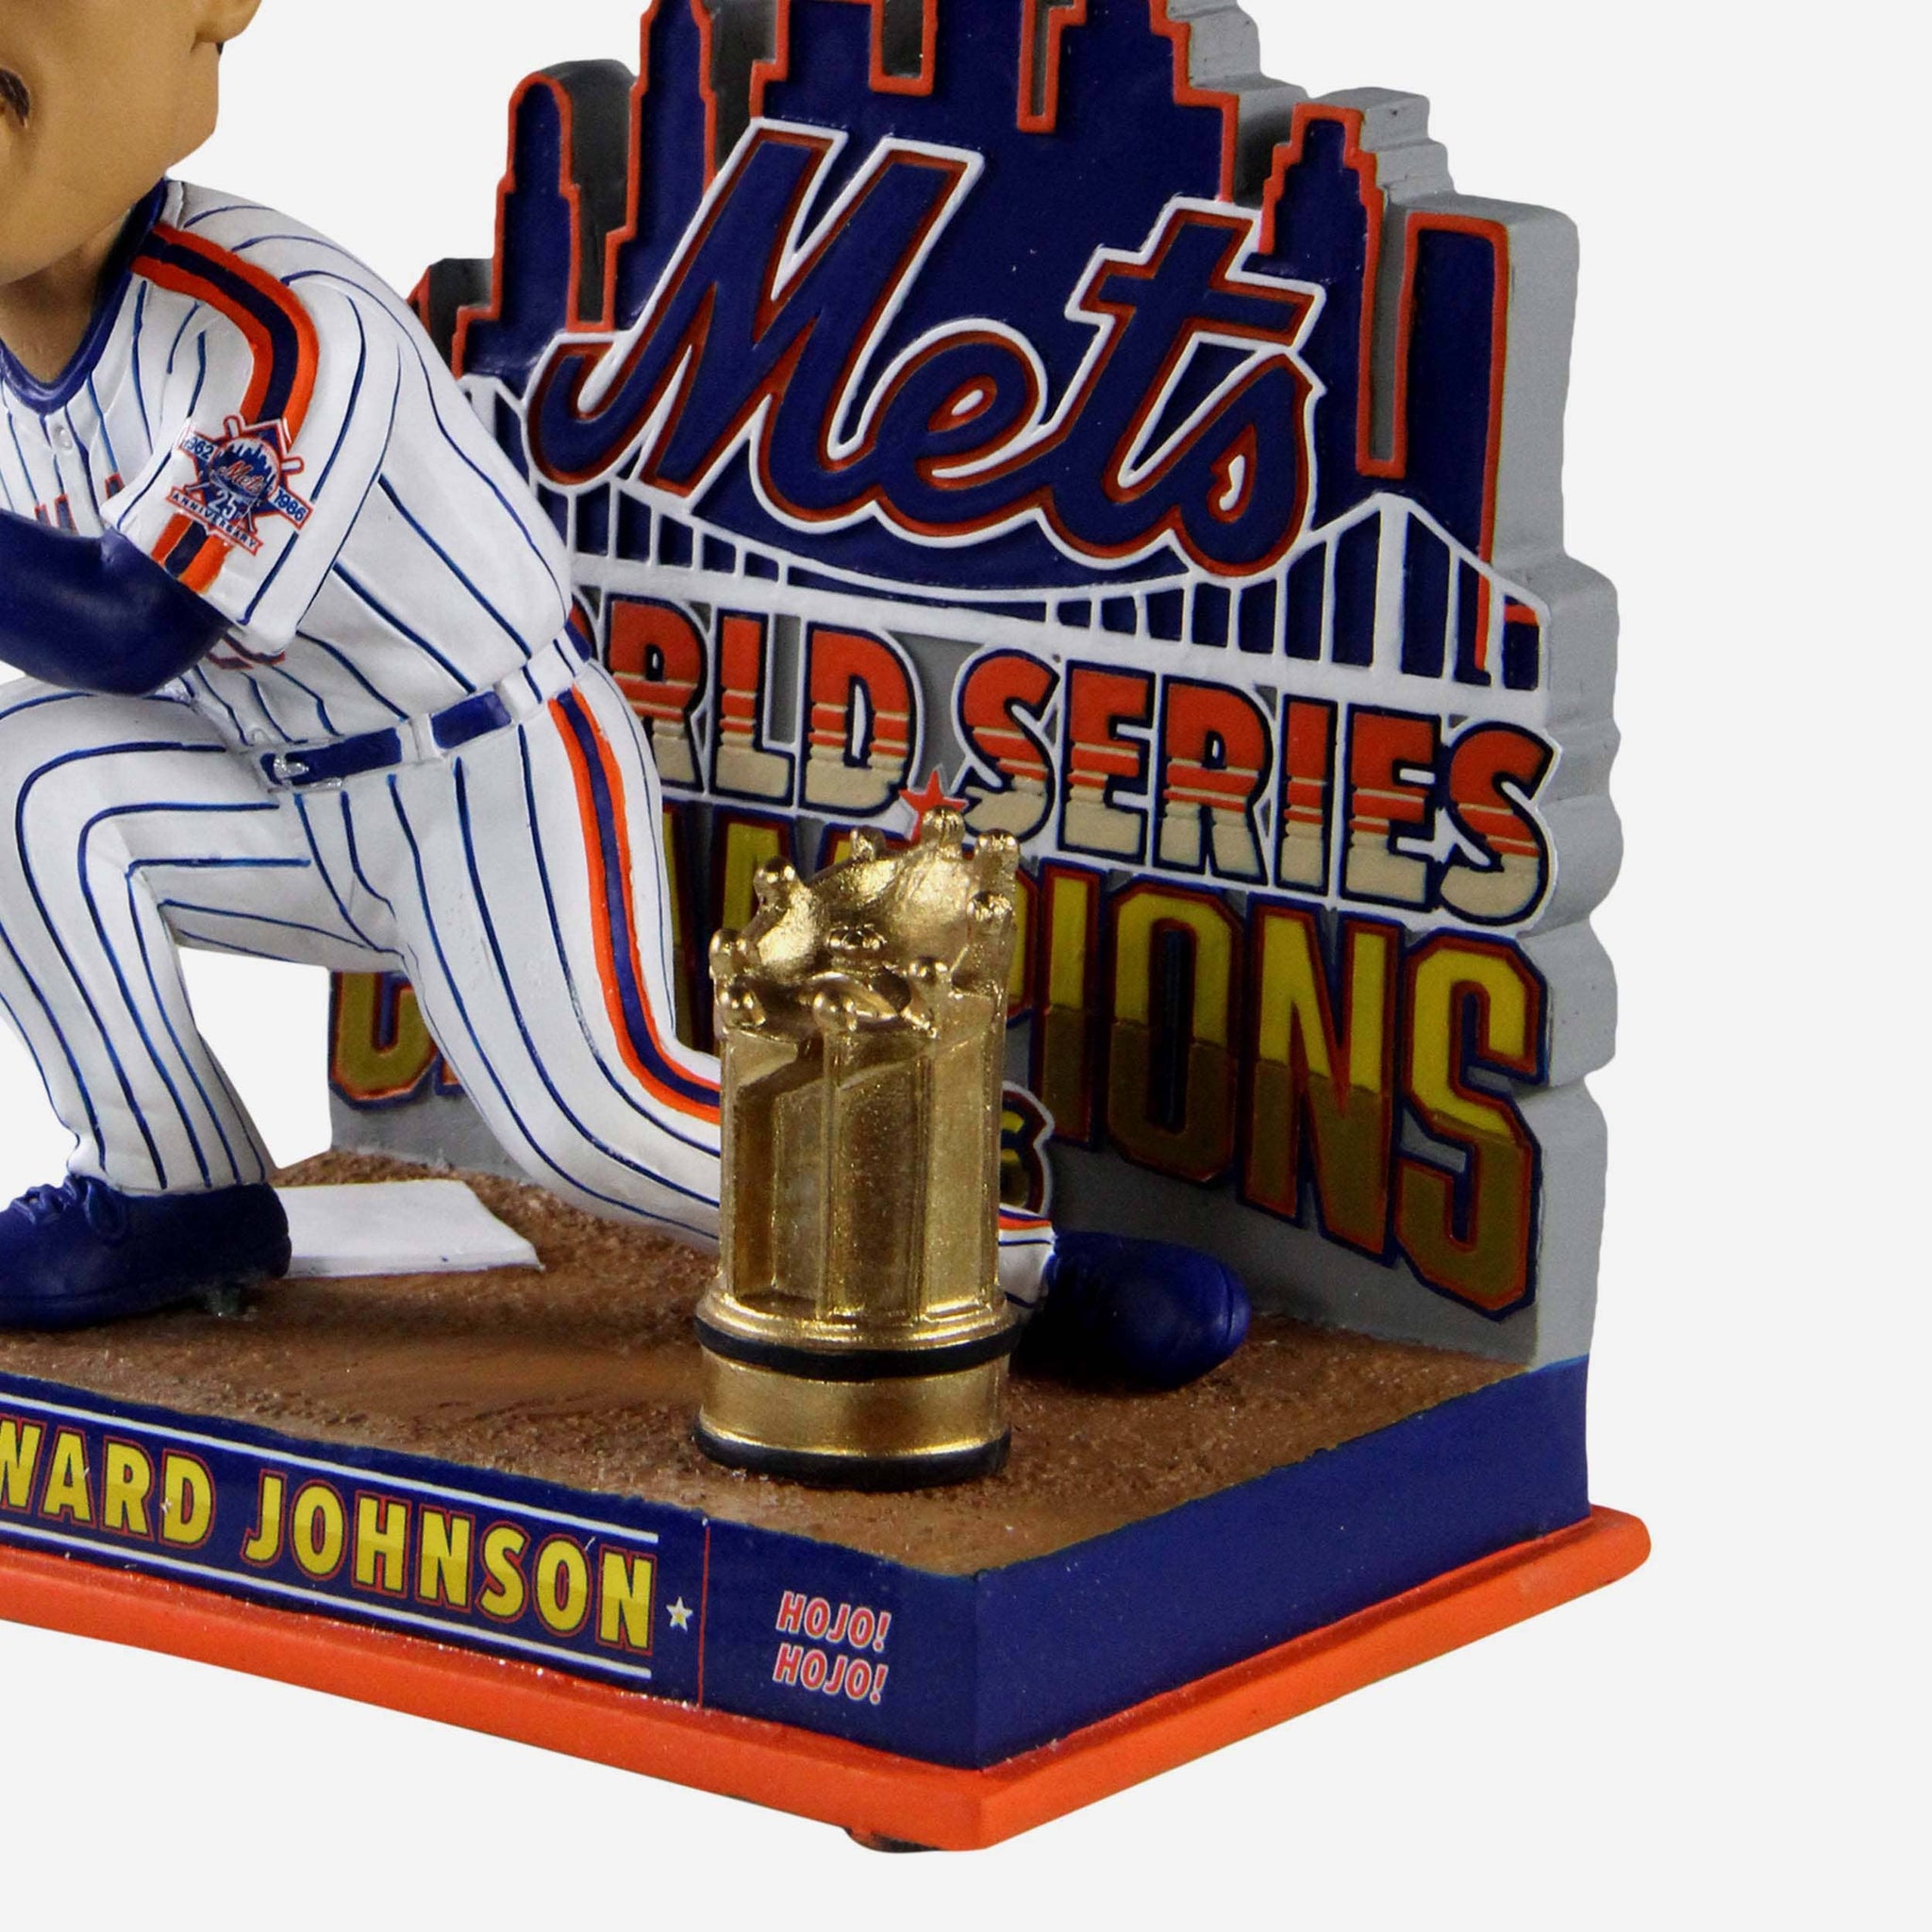 Howard Johnson New York Mets 1986 World Series Champions